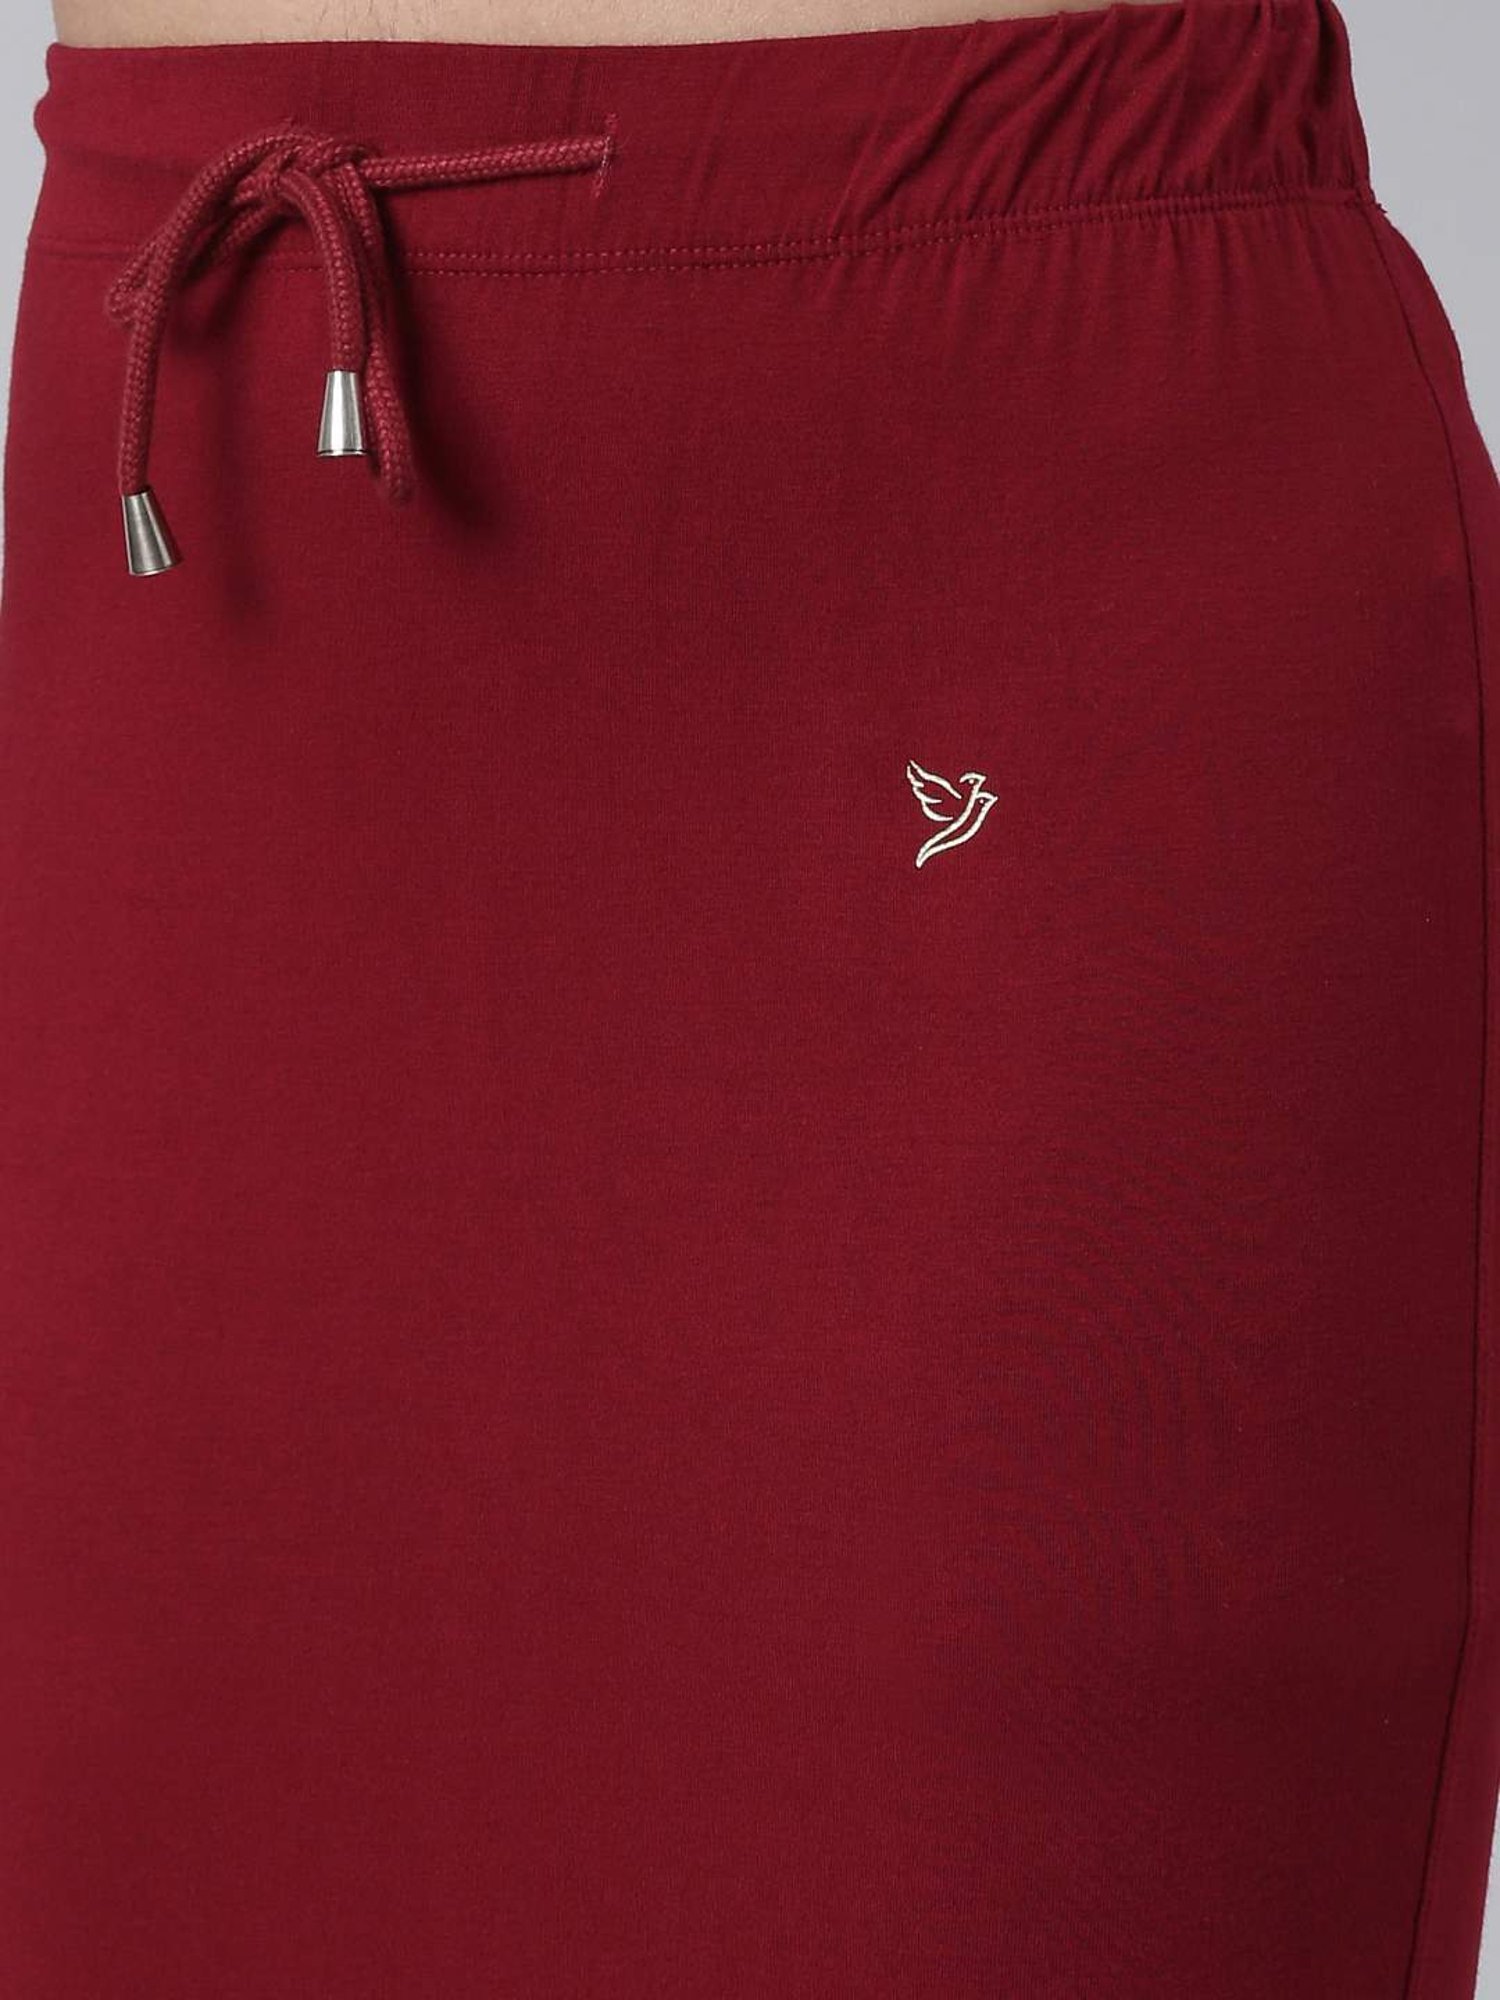 TWIN BIRDS Maroon & Red Plain Saree Shapewear - Pack Of 2